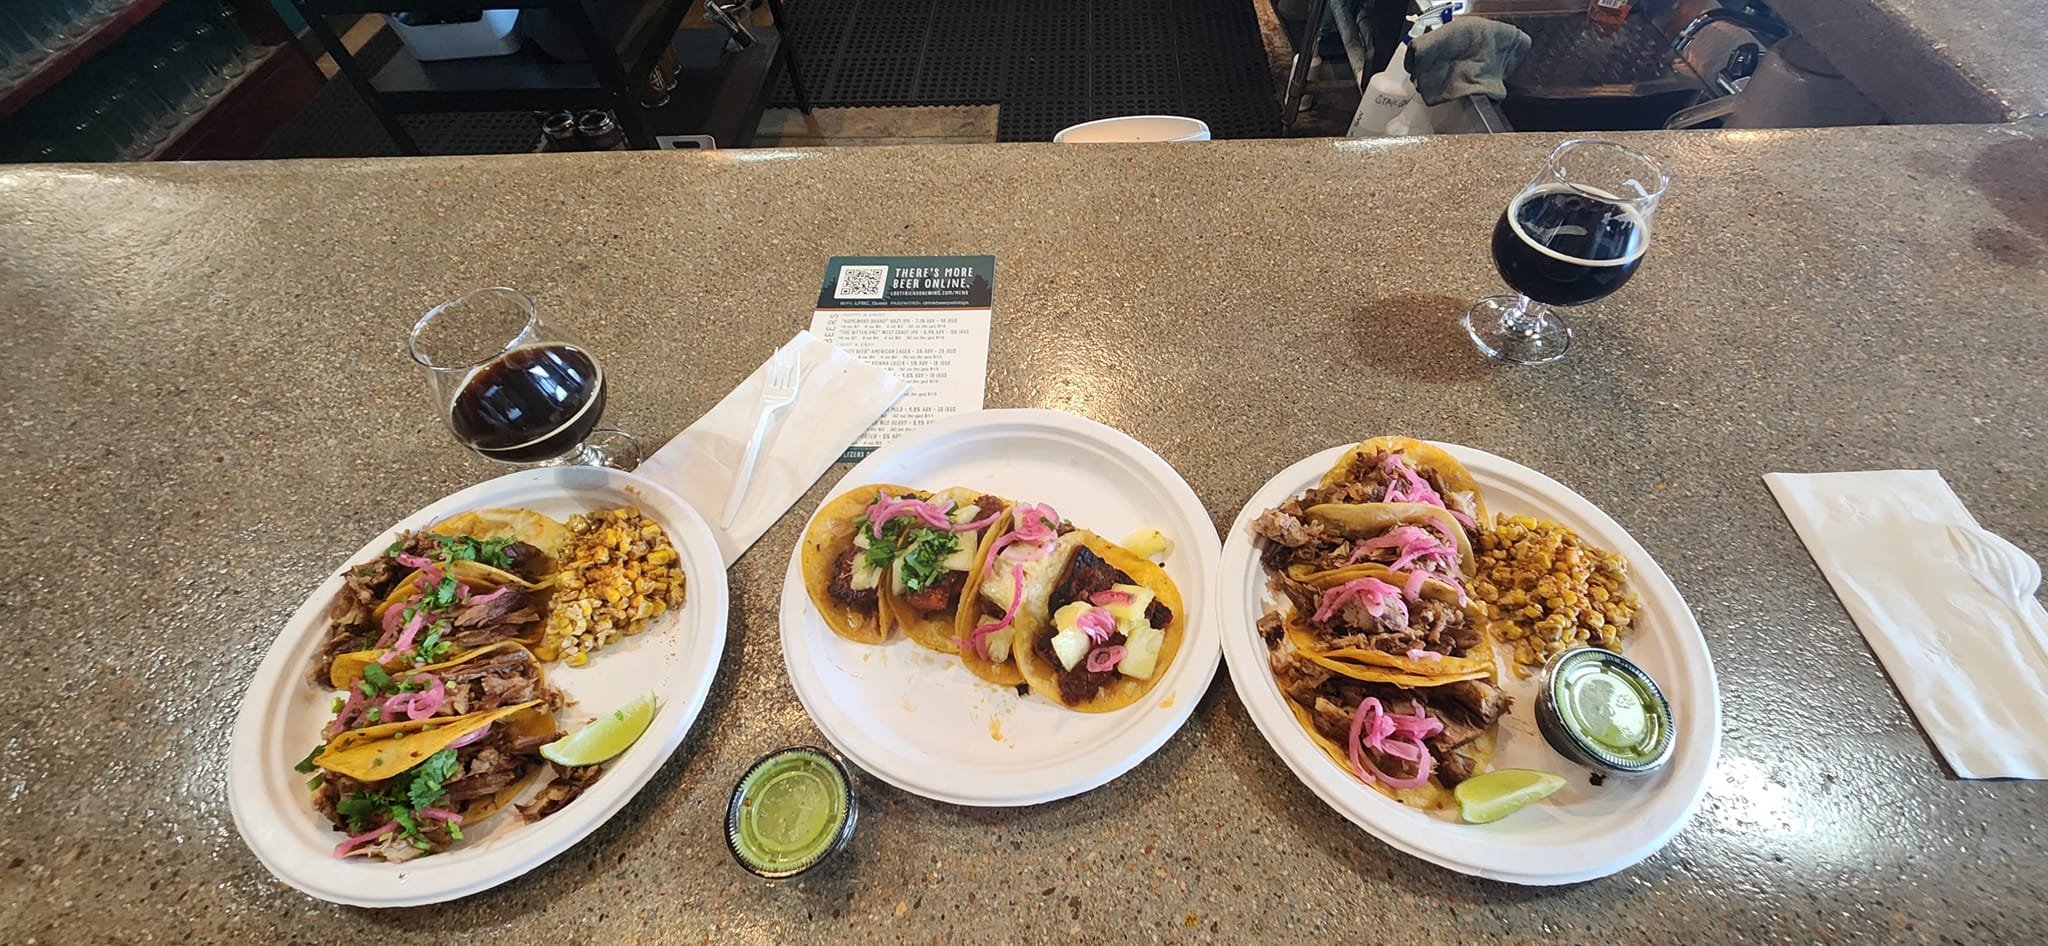 Street Tacos Plates 